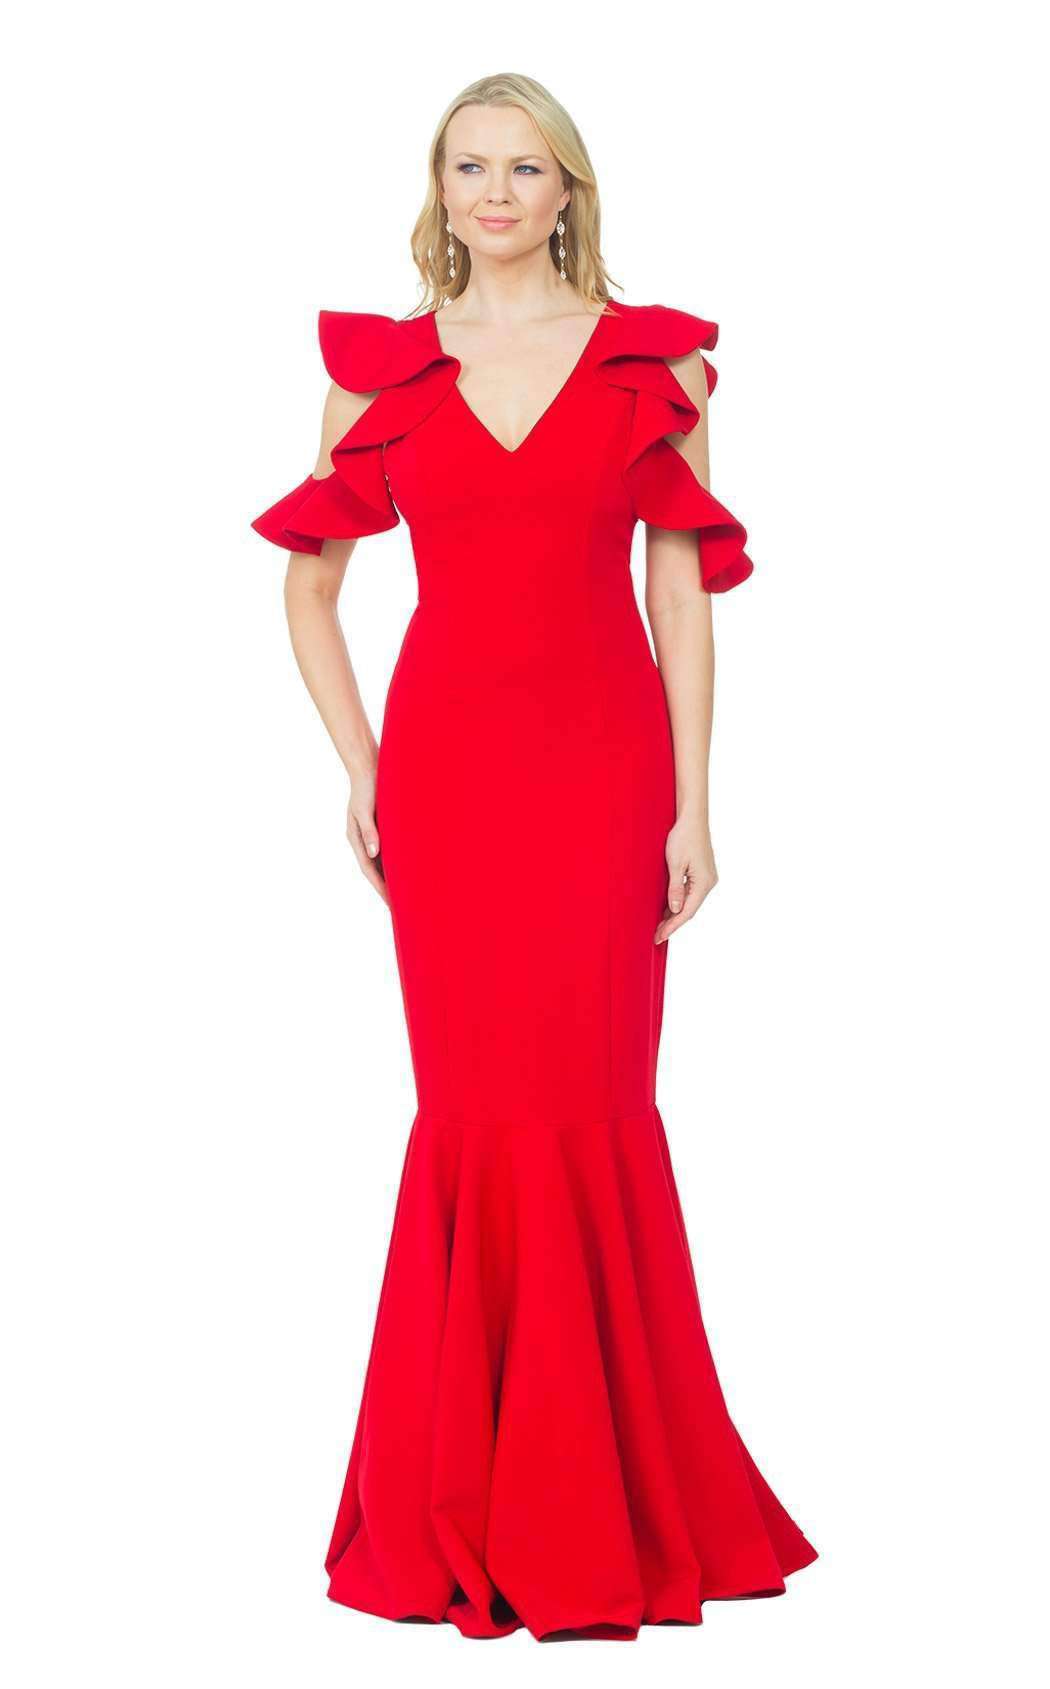 Posh Couture 1720L Dress | Buy Designer Gowns & Evening Dresses ...